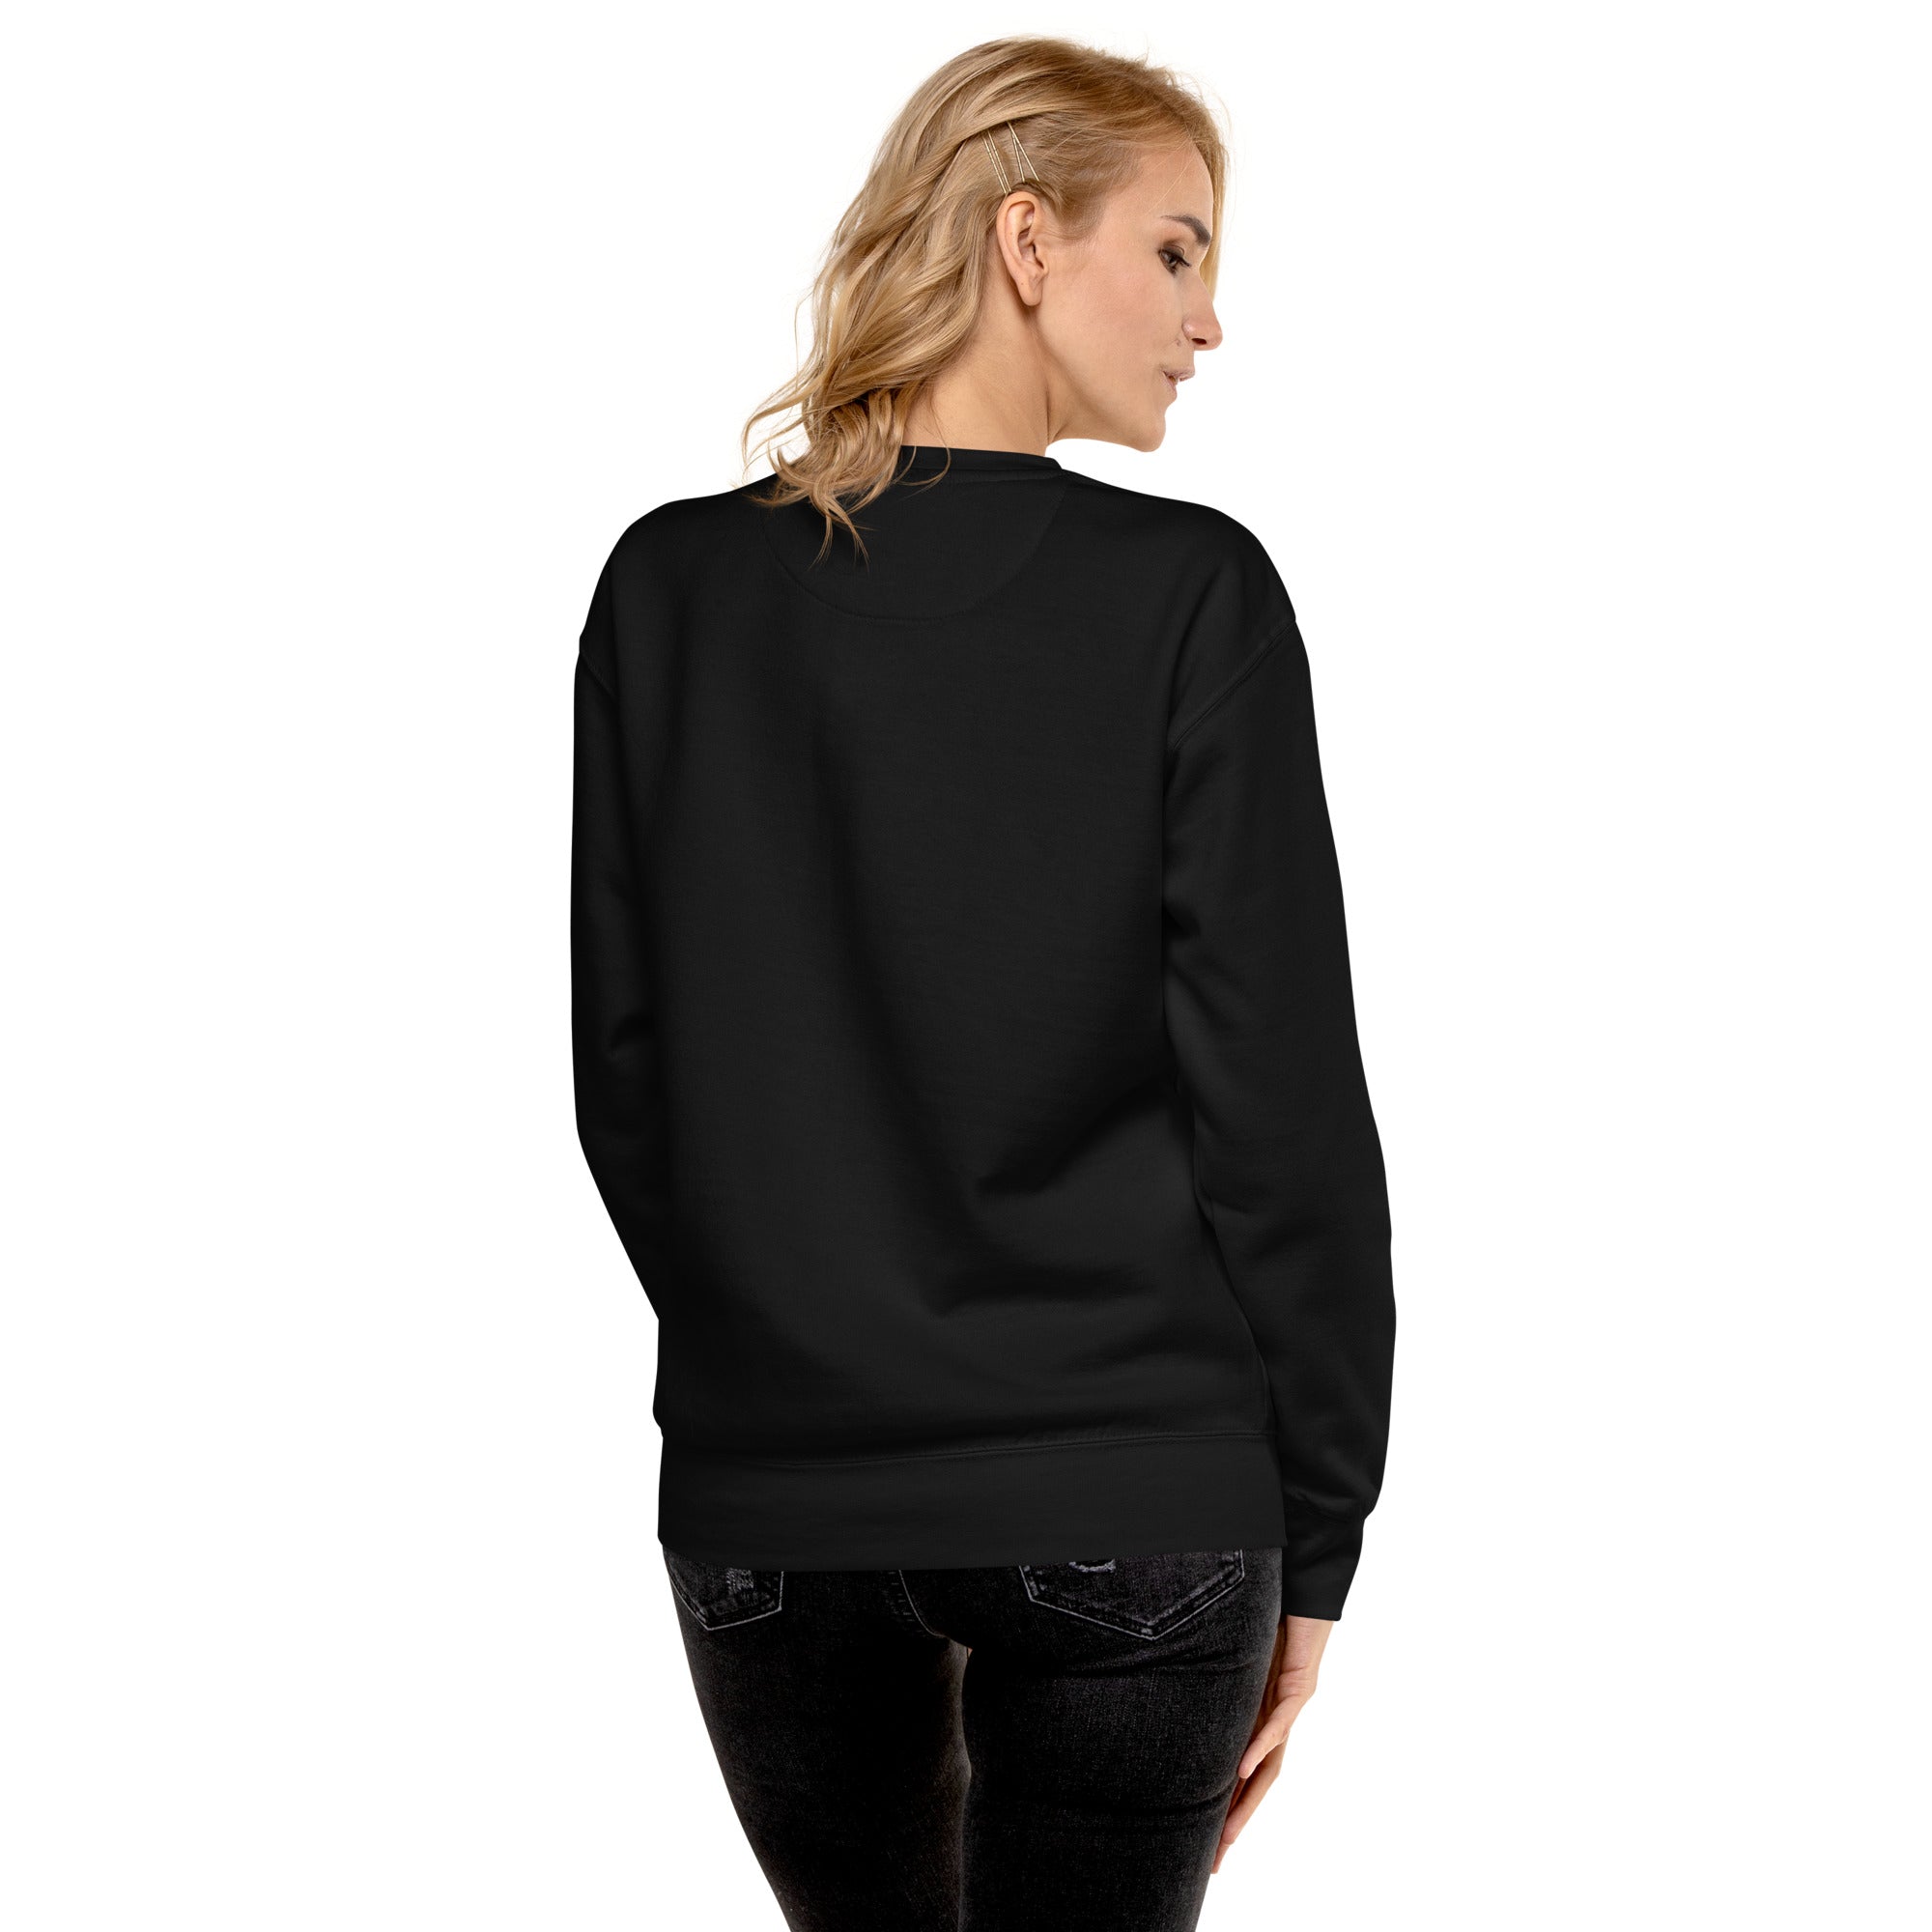 Unisex Premium Sweatshirt Love Instructor large embroidered pattern